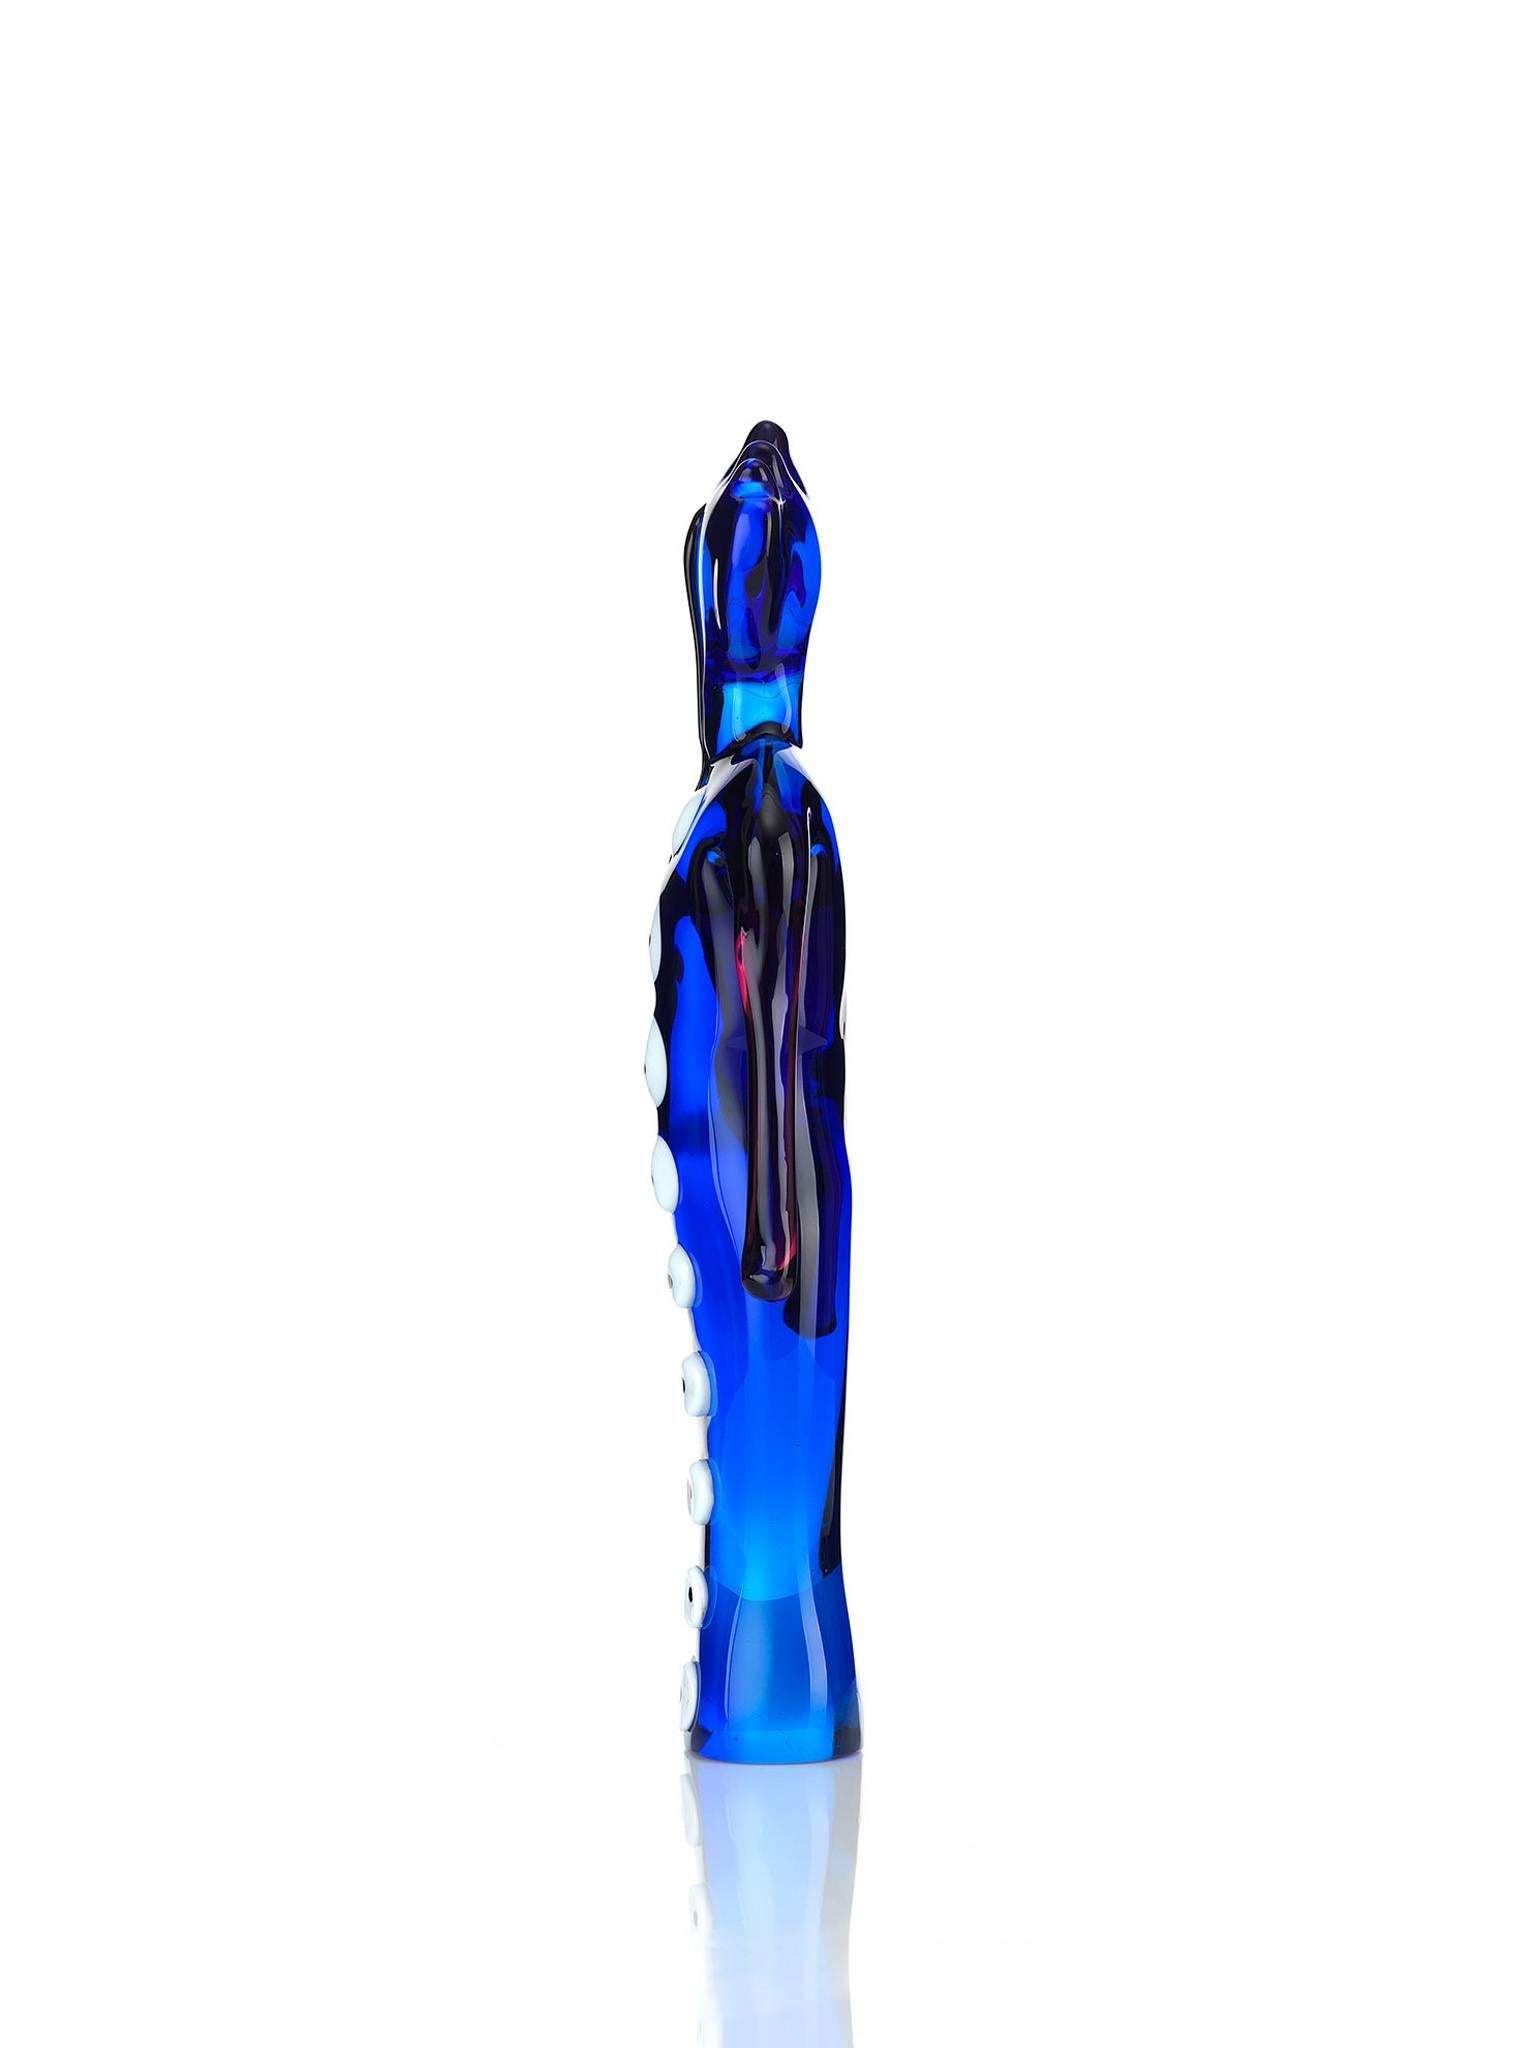 Arlequin bleu à droite - Sculpture by James Coignard